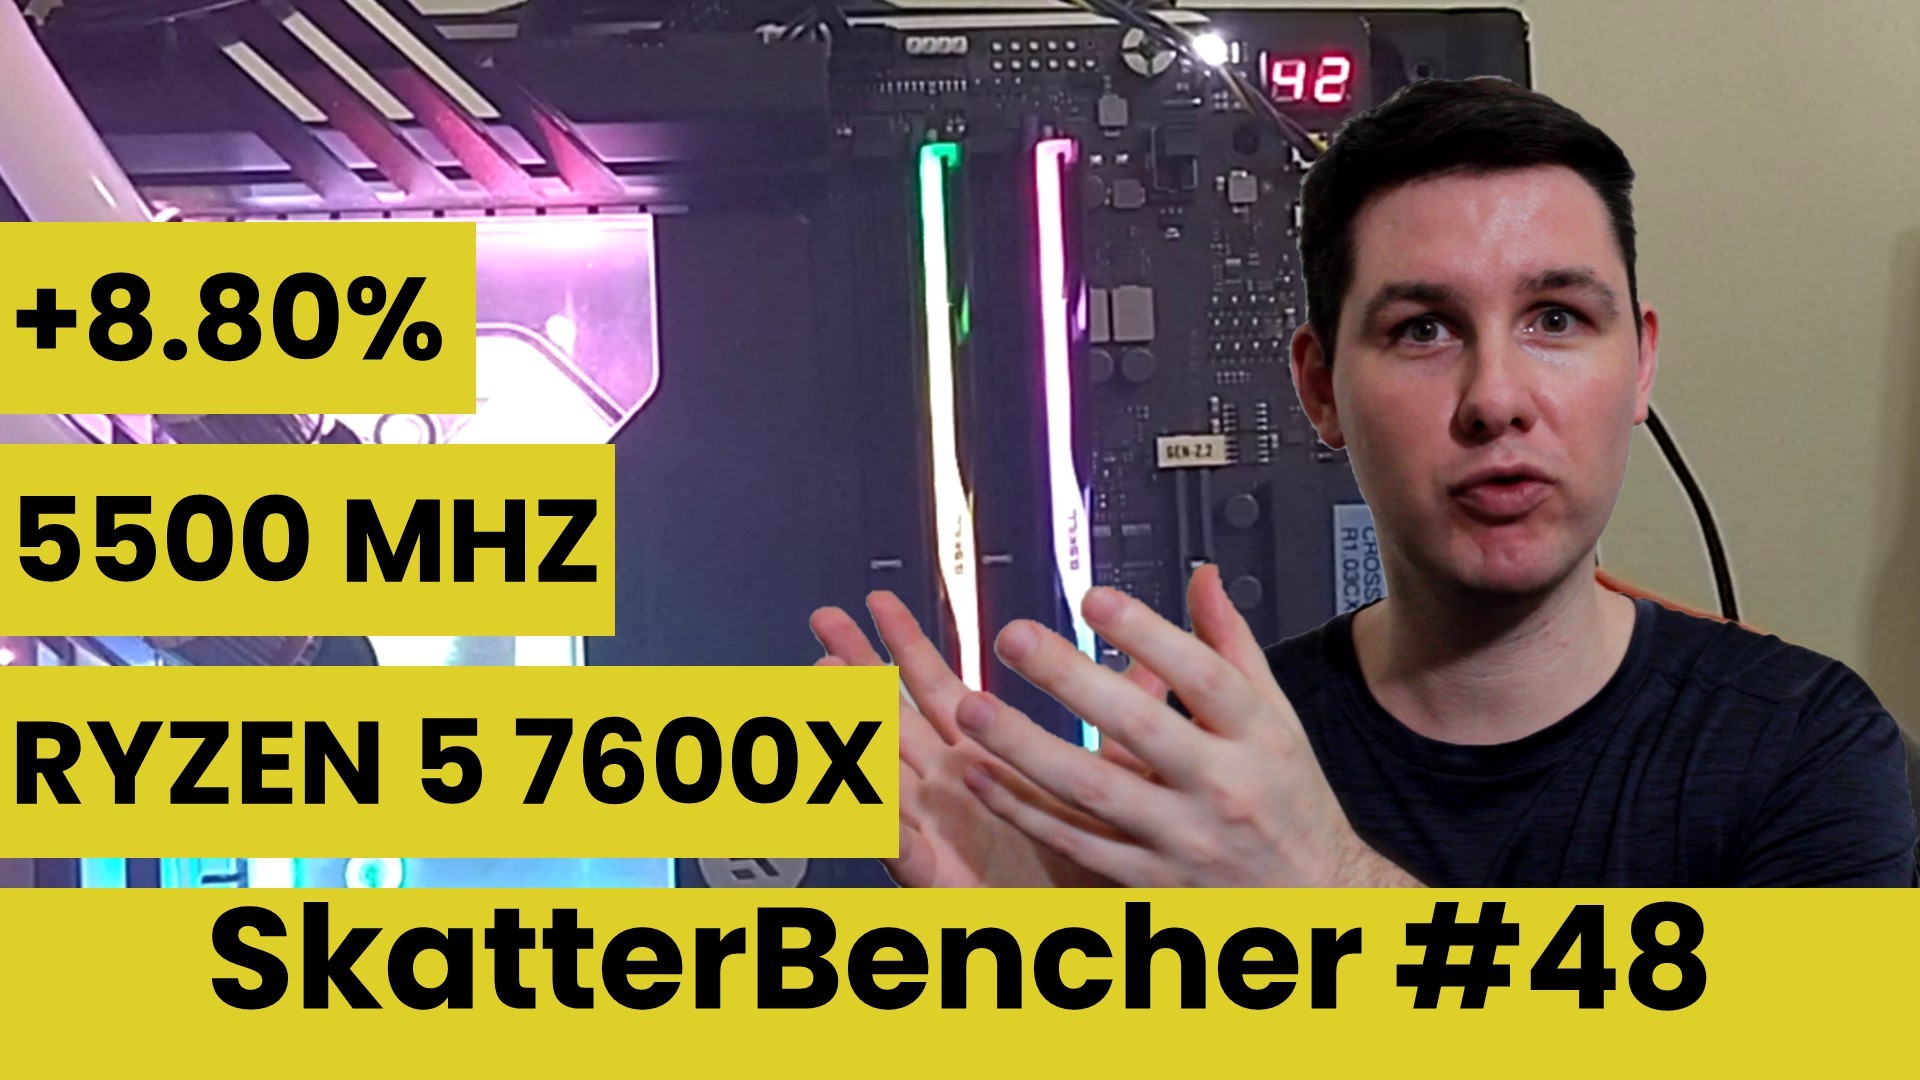 SkatterBencher #48: AMD Ryzen 5 7600X Overclocked to 5544 MHz